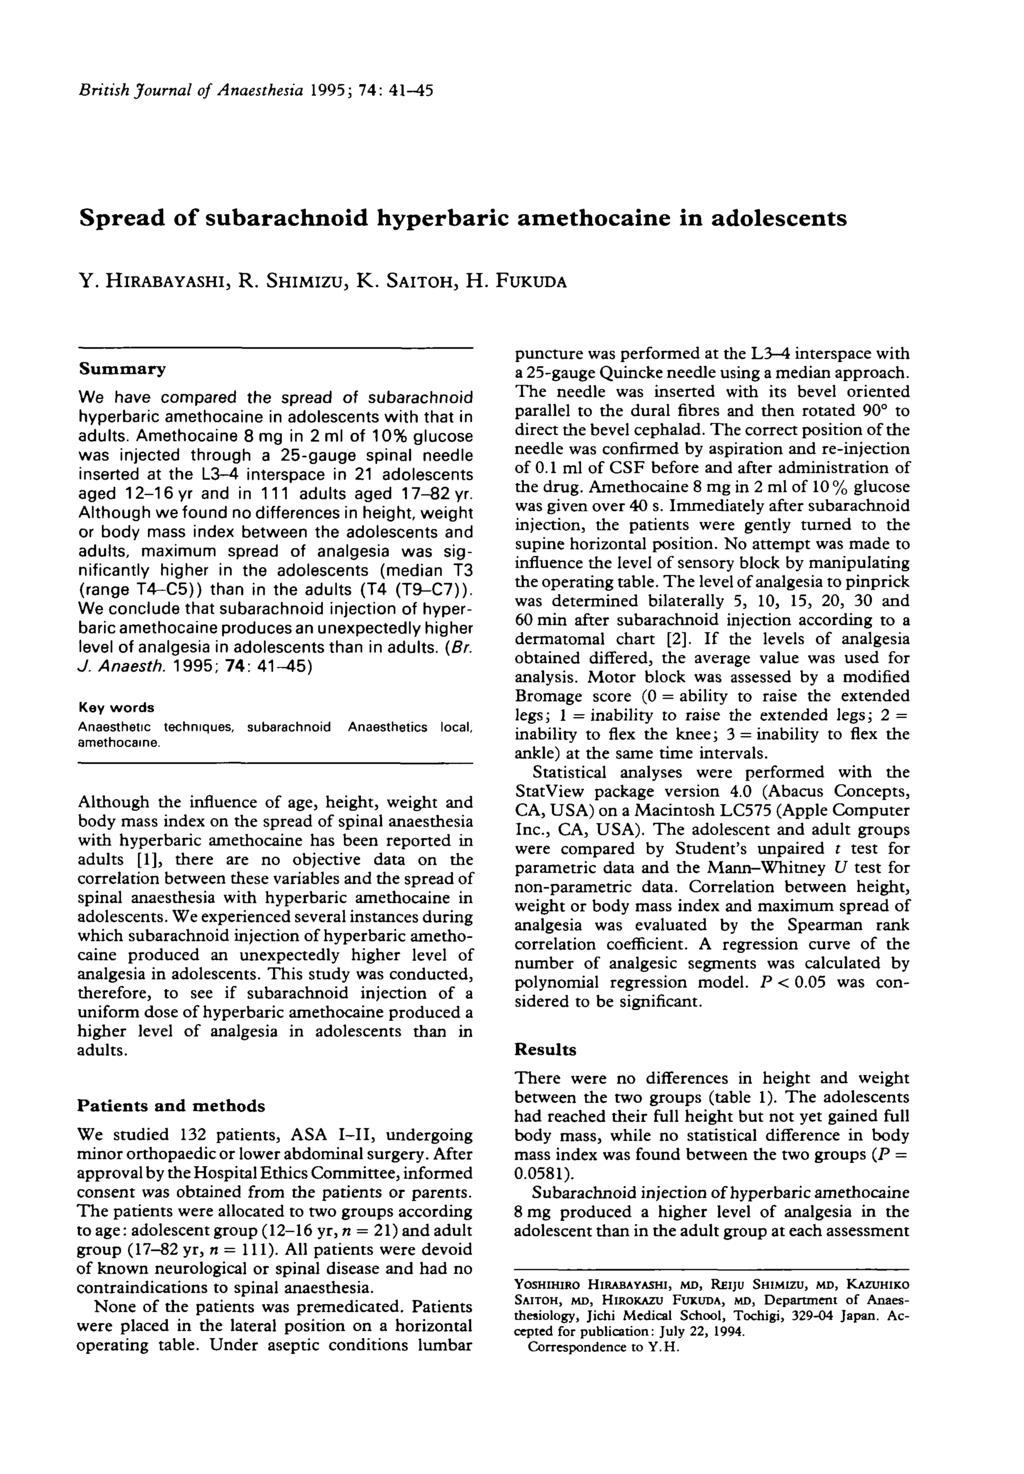 British Journal of Anaesthesia 1995; 74: 41-45 Spread of subarachnoid hyperbaric amethocaine in adolescents Y. HIRABAYASHI, R. SHIMIZU, K. SAITOH, H.